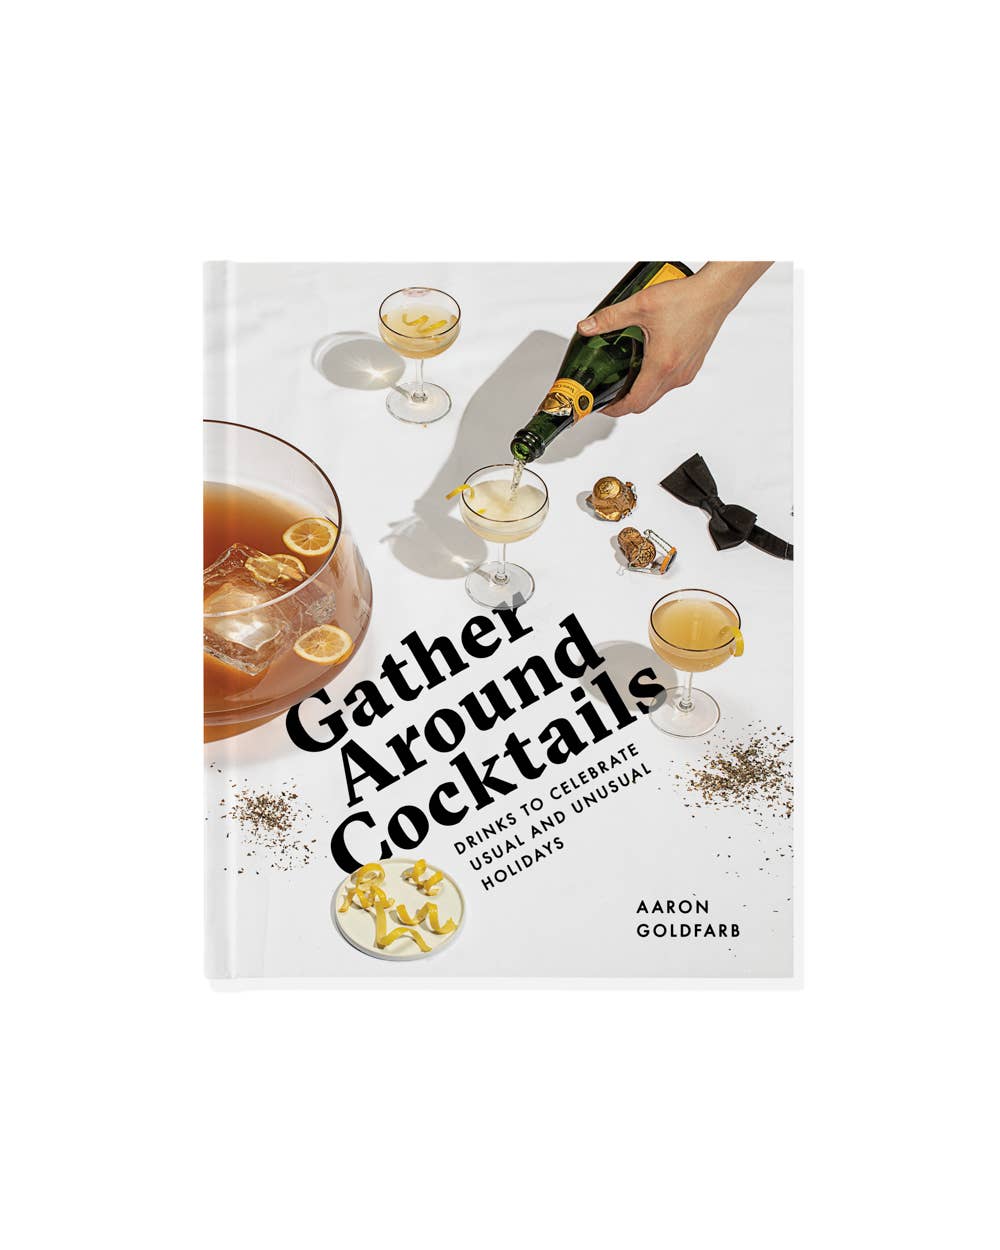 Gather Around Cocktails, recipe book